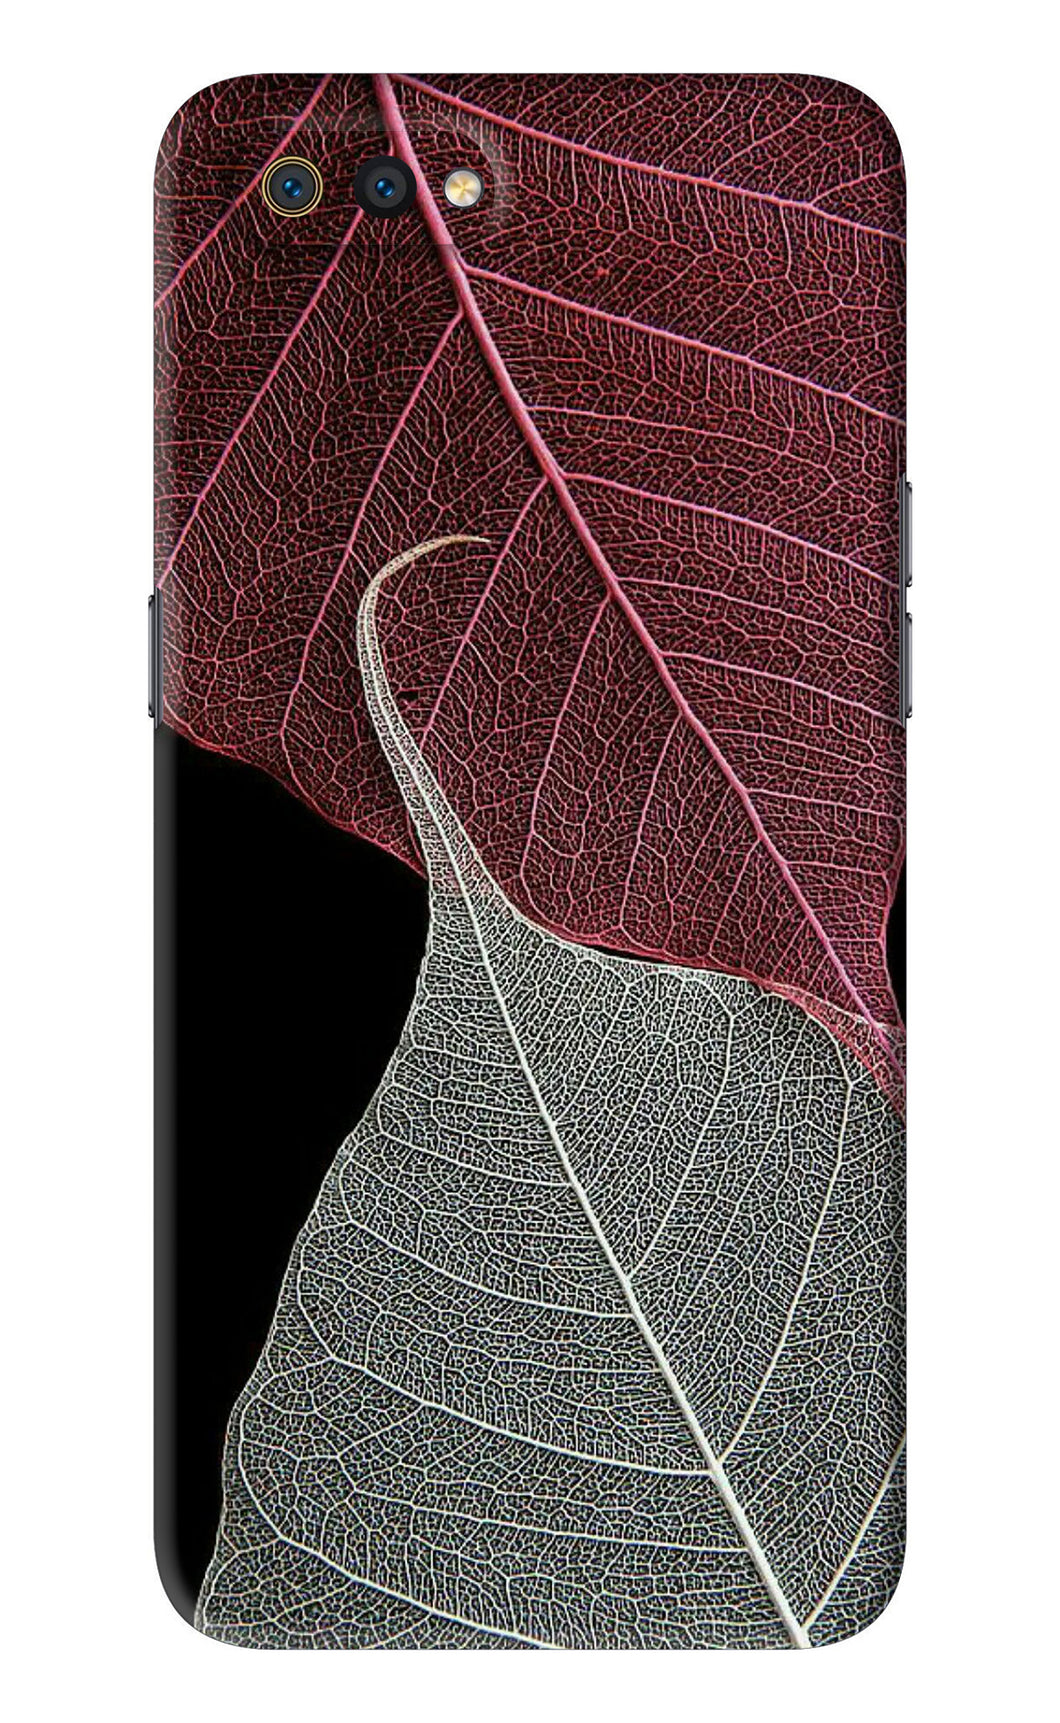 Leaf Pattern Realme C2 Back Skin Wrap